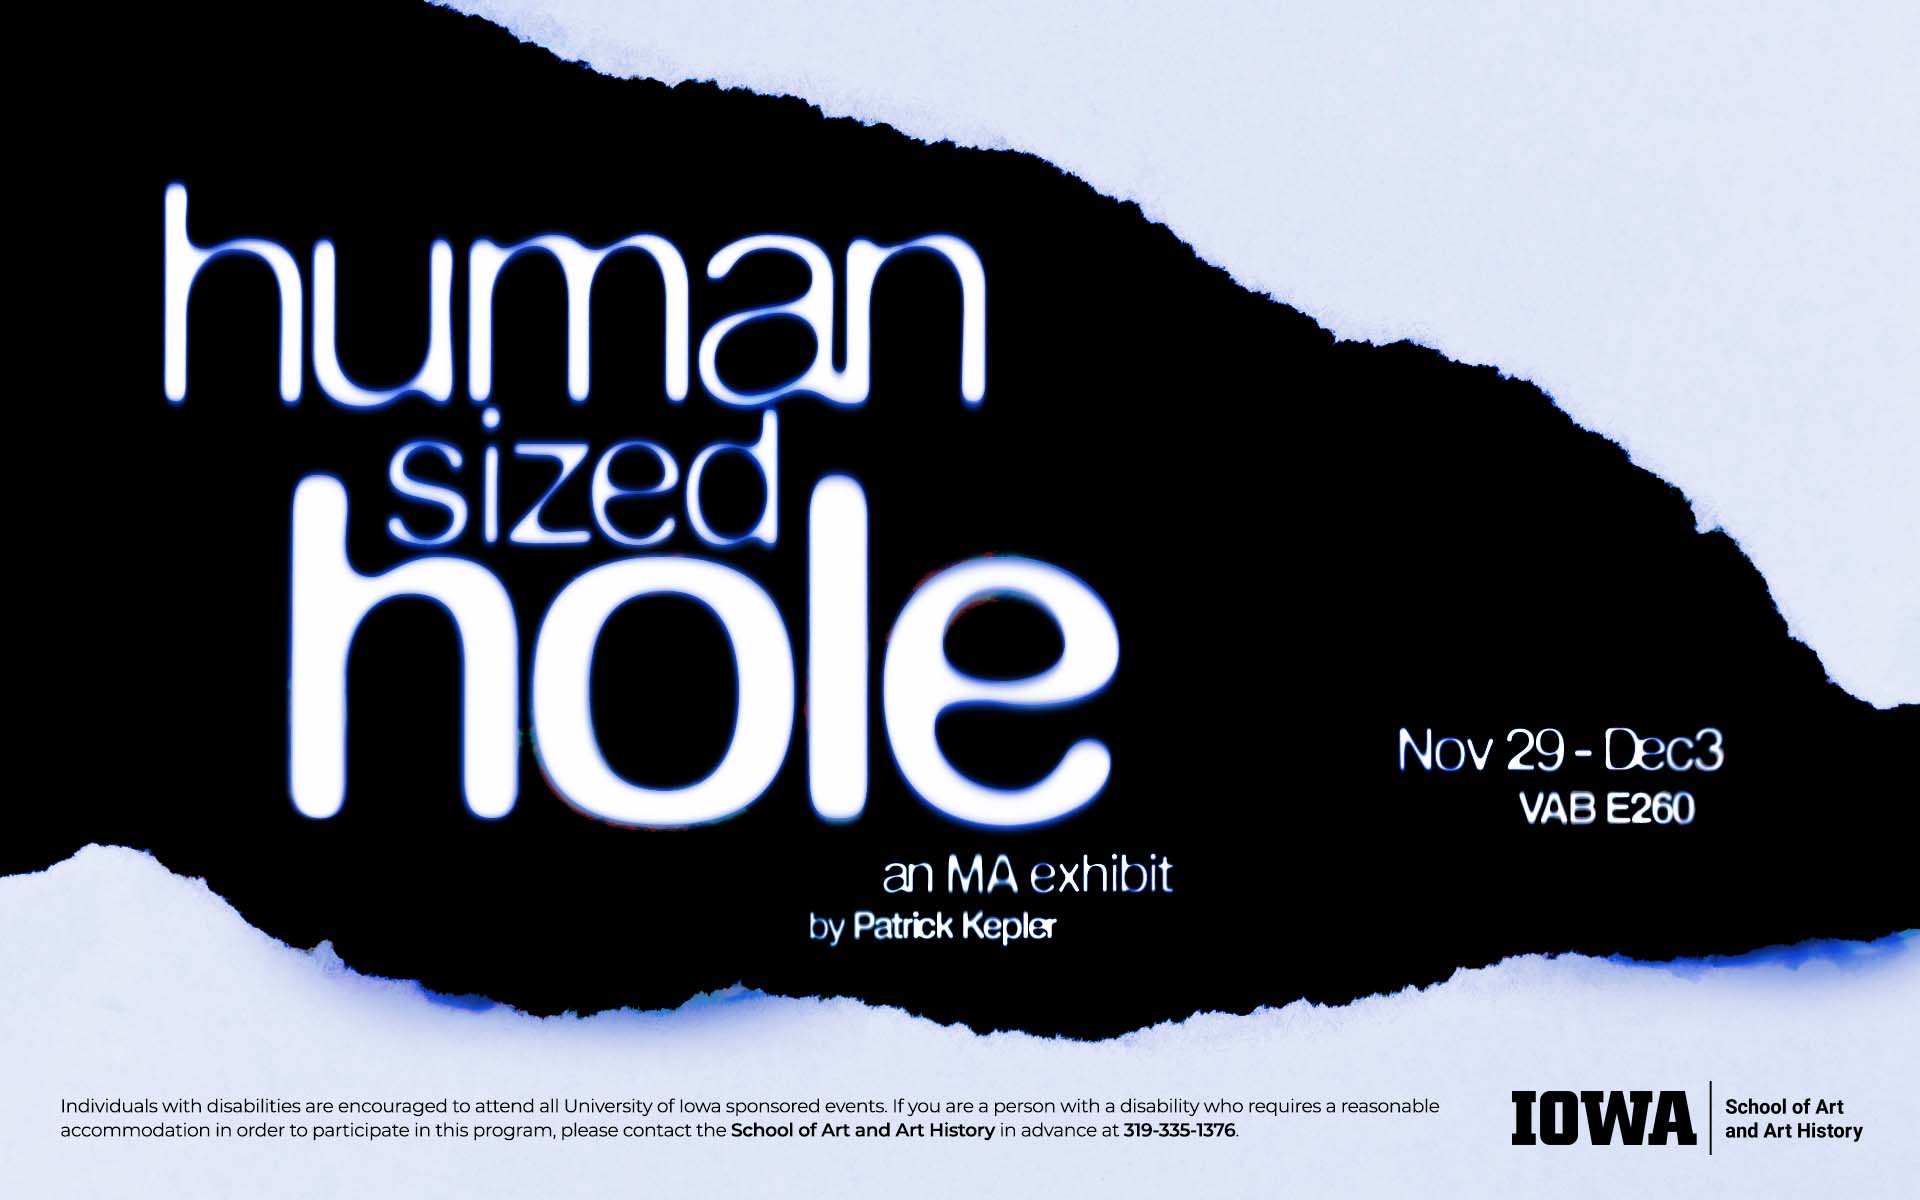 black shape white lettering with blue edging show card "Human sized hole" Nov 29-De 3 VAB E260